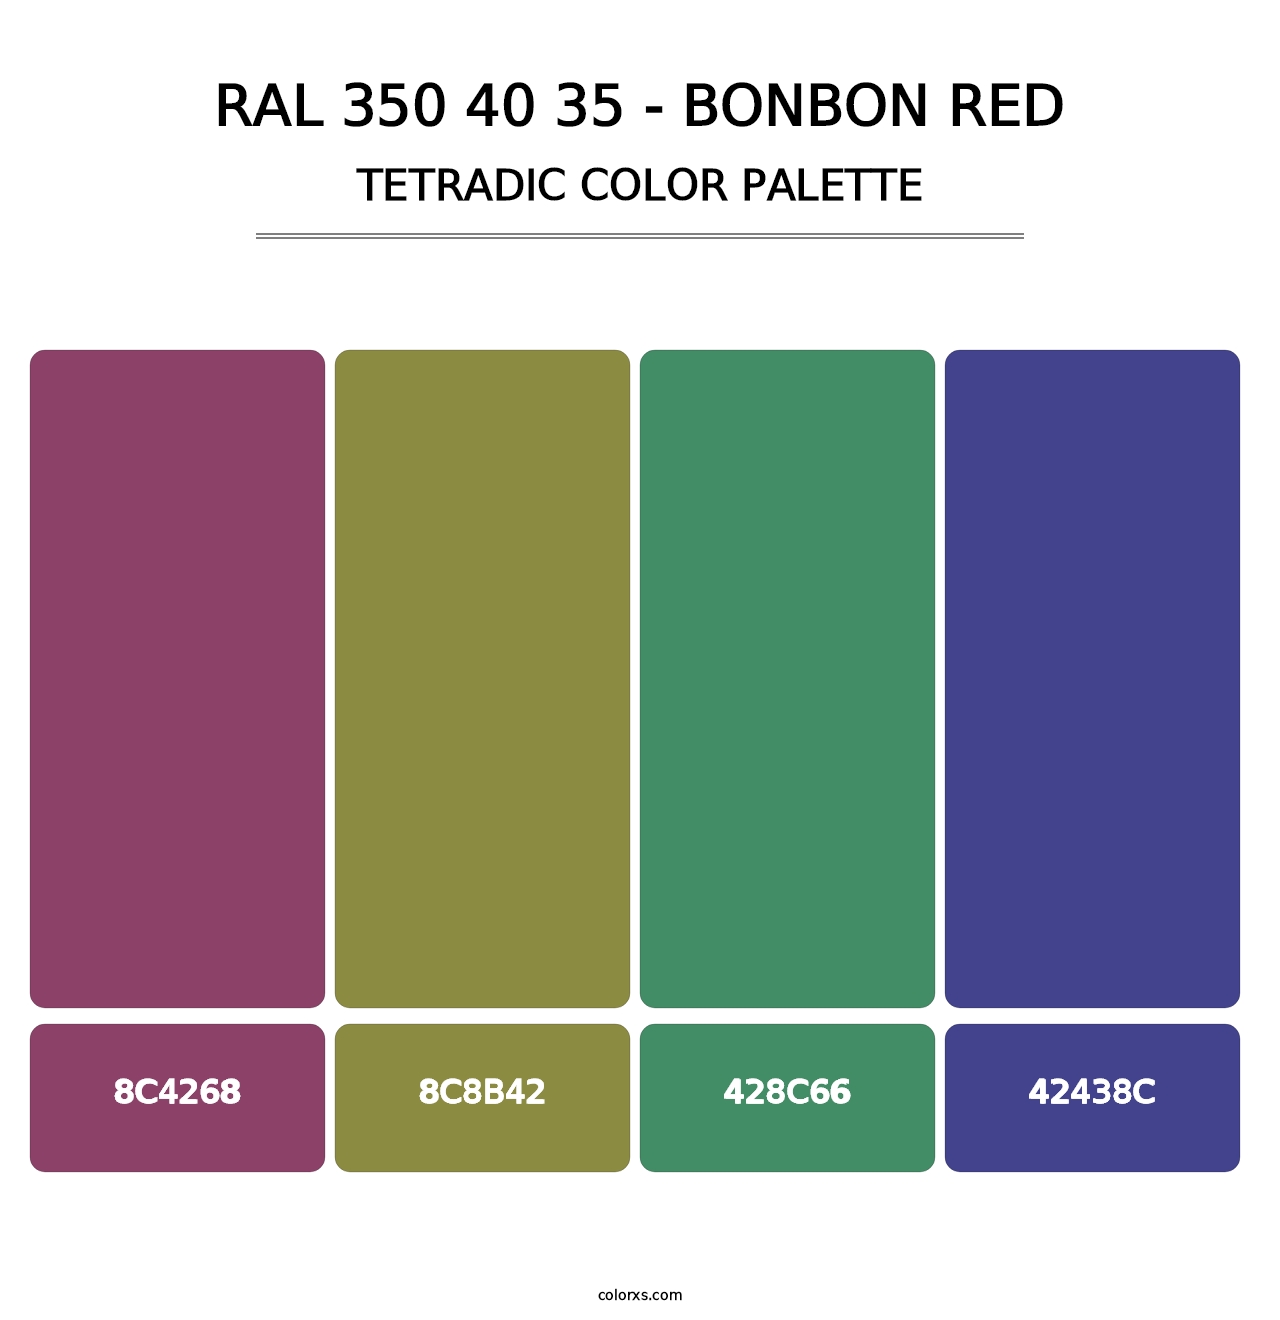 RAL 350 40 35 - Bonbon Red - Tetradic Color Palette